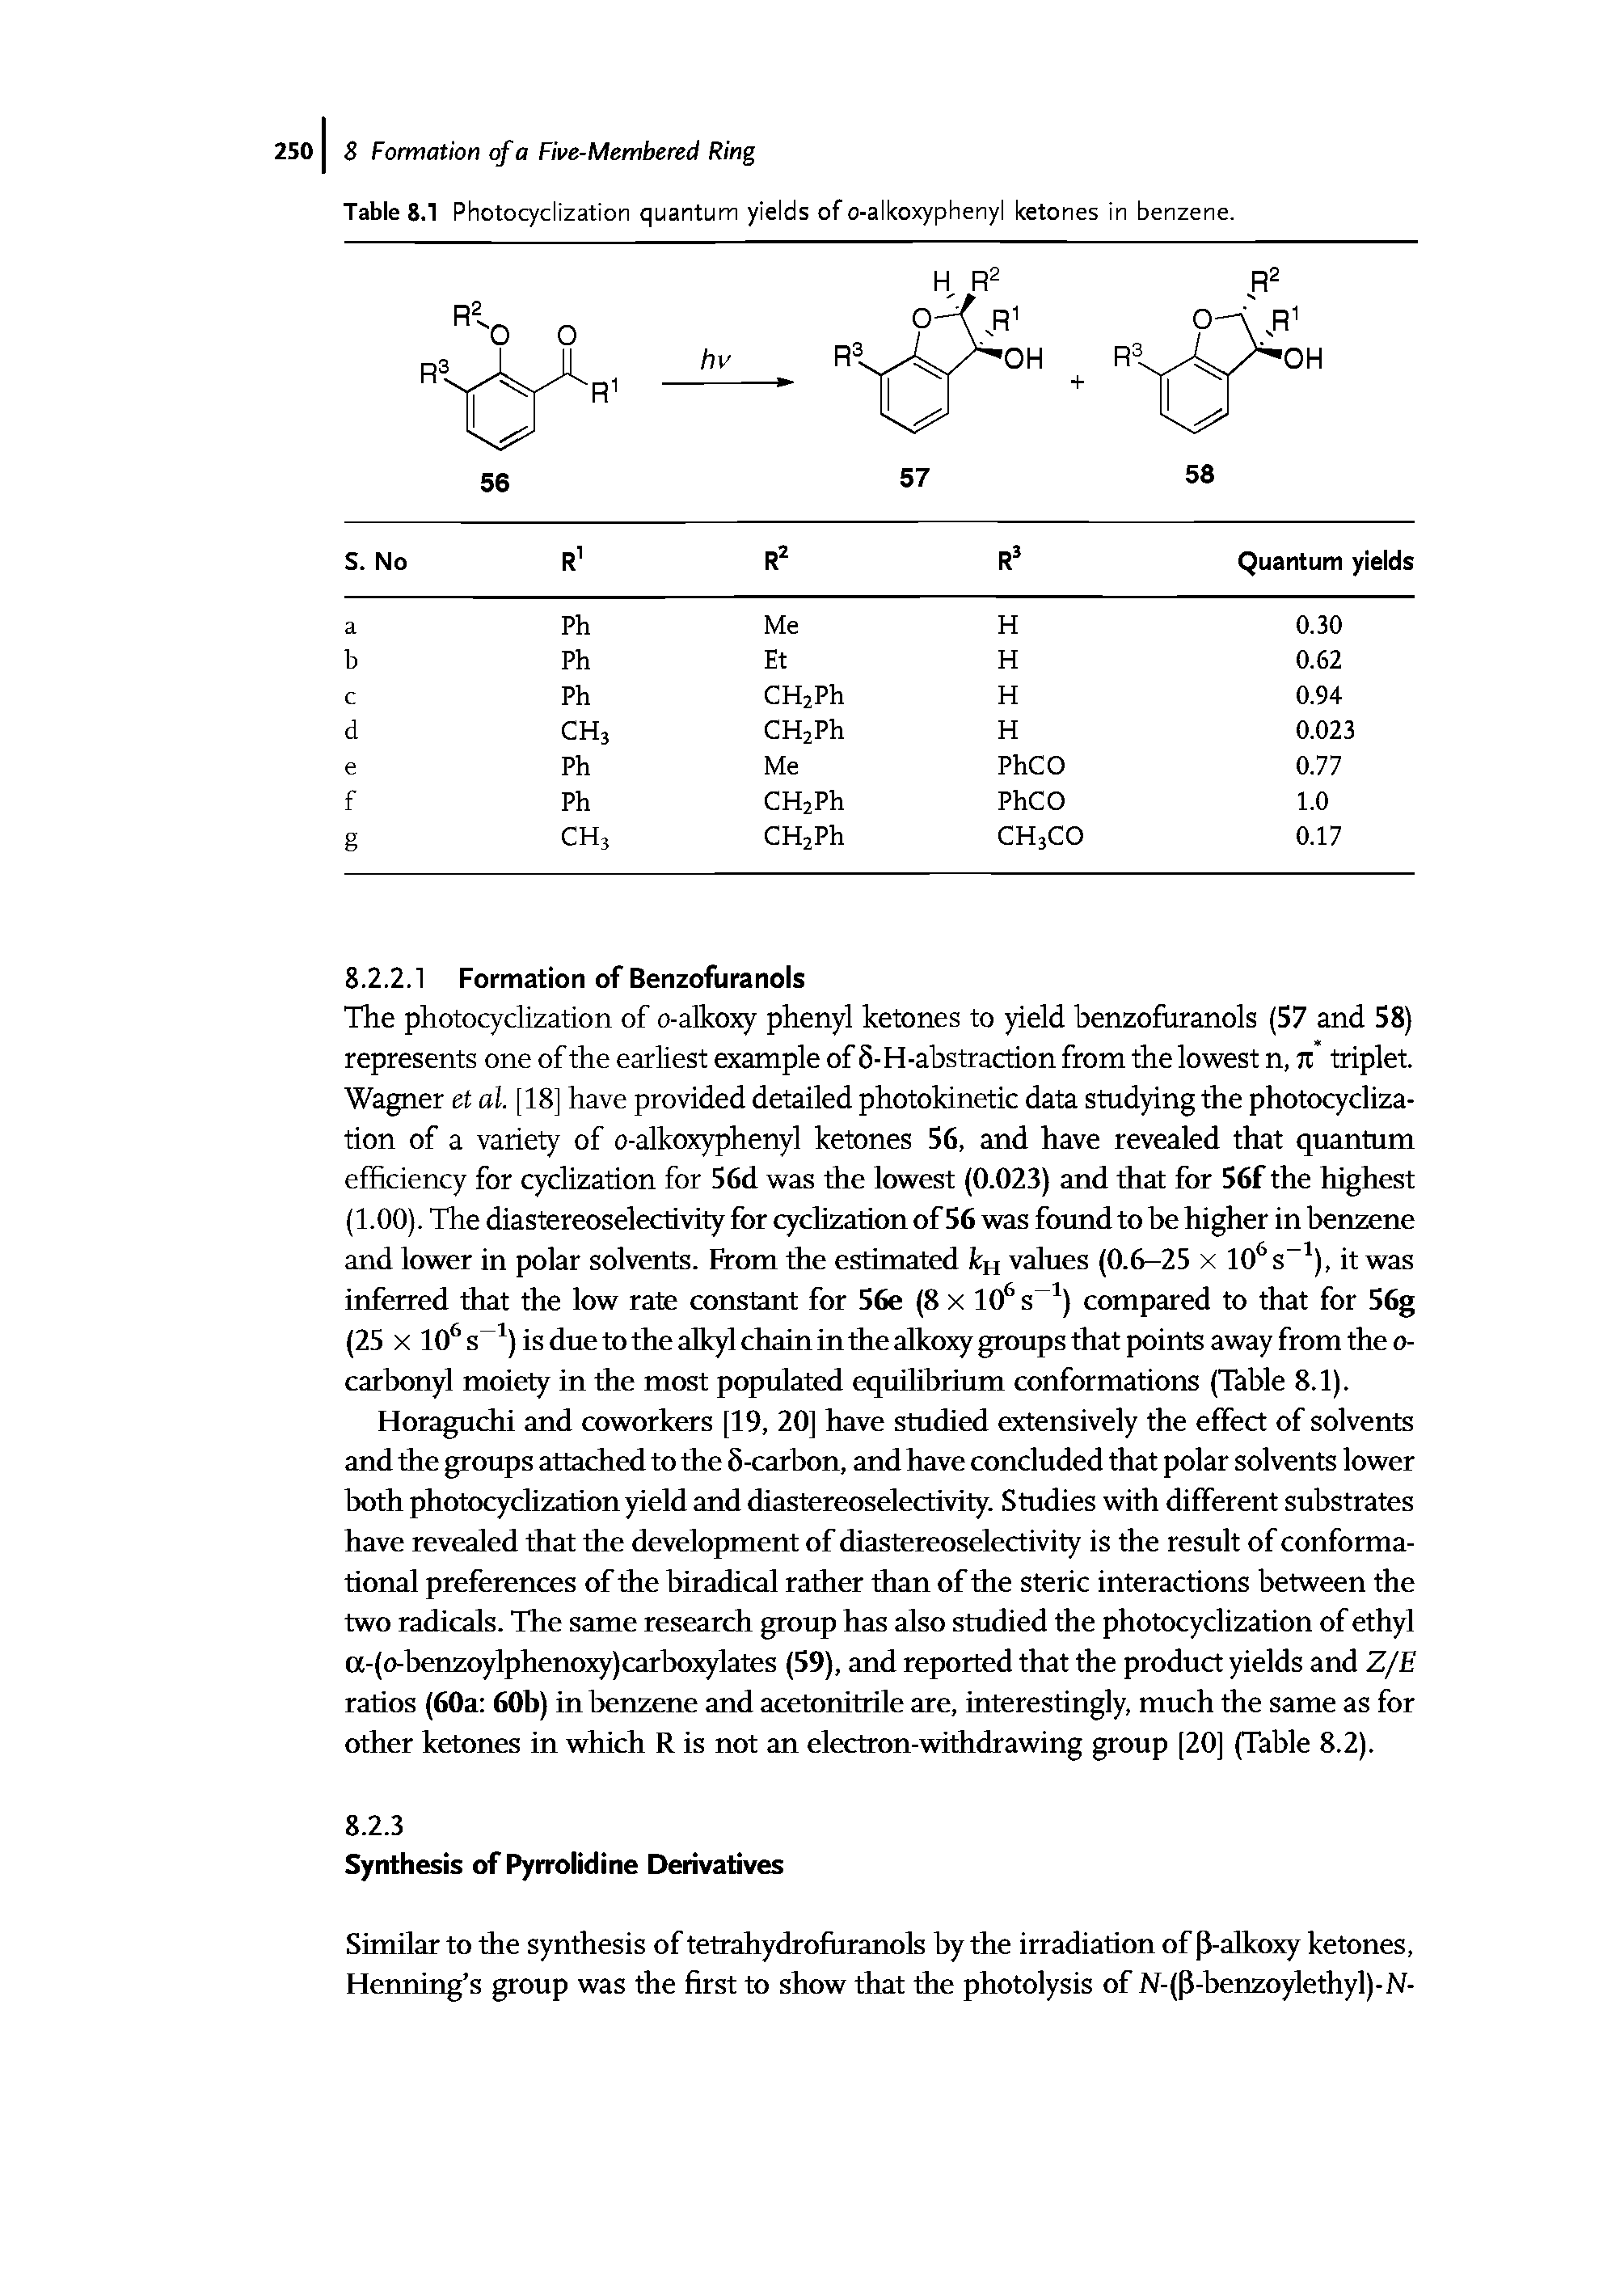 Table 8.1 Photocyclization quantum yields of o-alkoxyphenyl ketones in benzene.